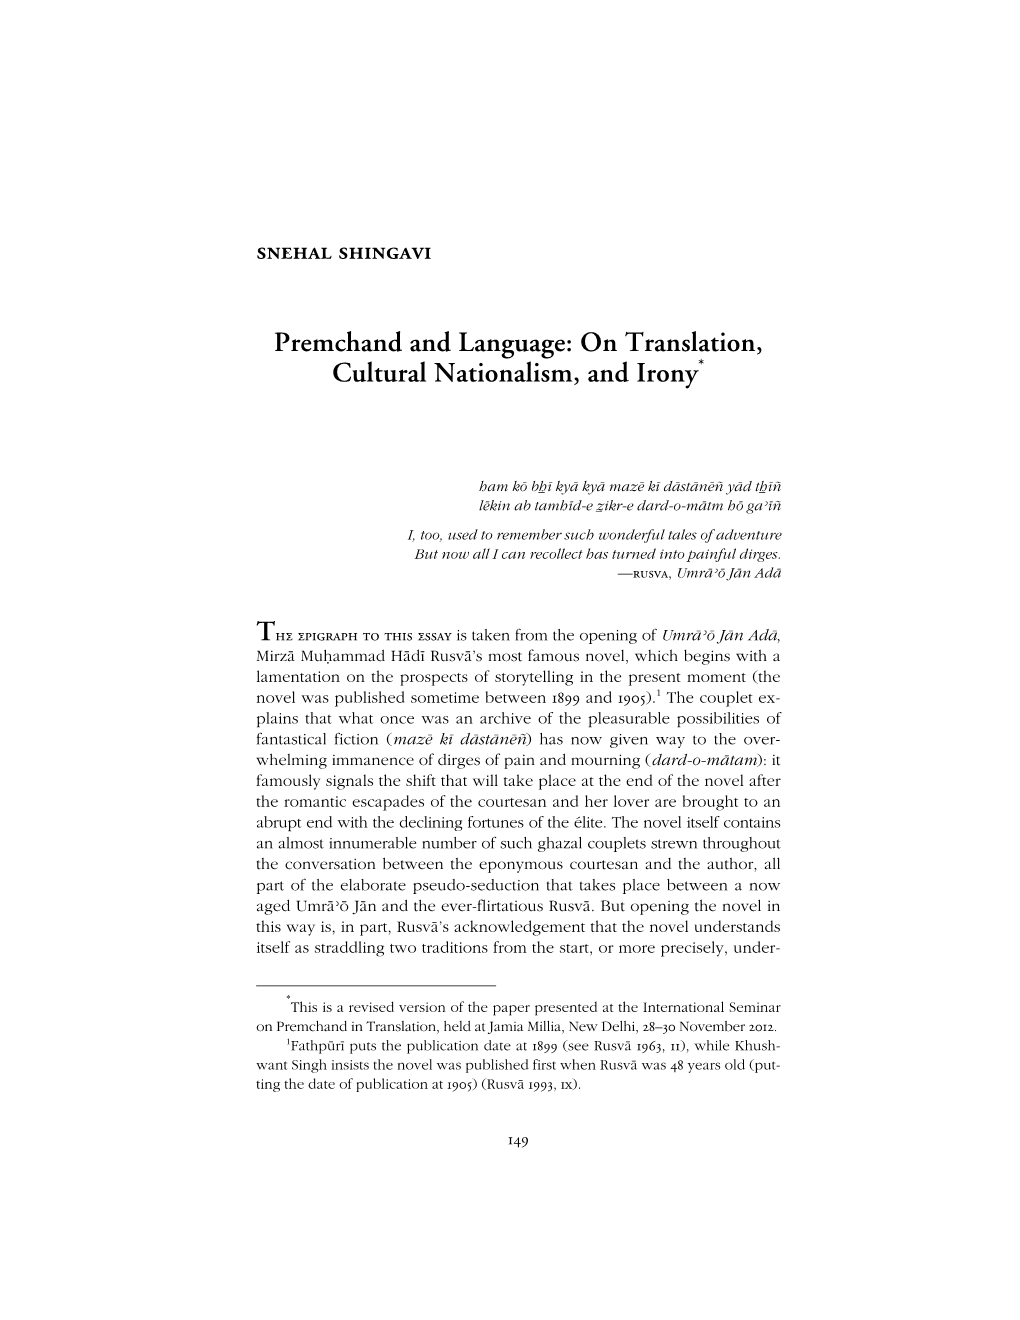 Premchand and Language: on Translation, Cultural Nationalism